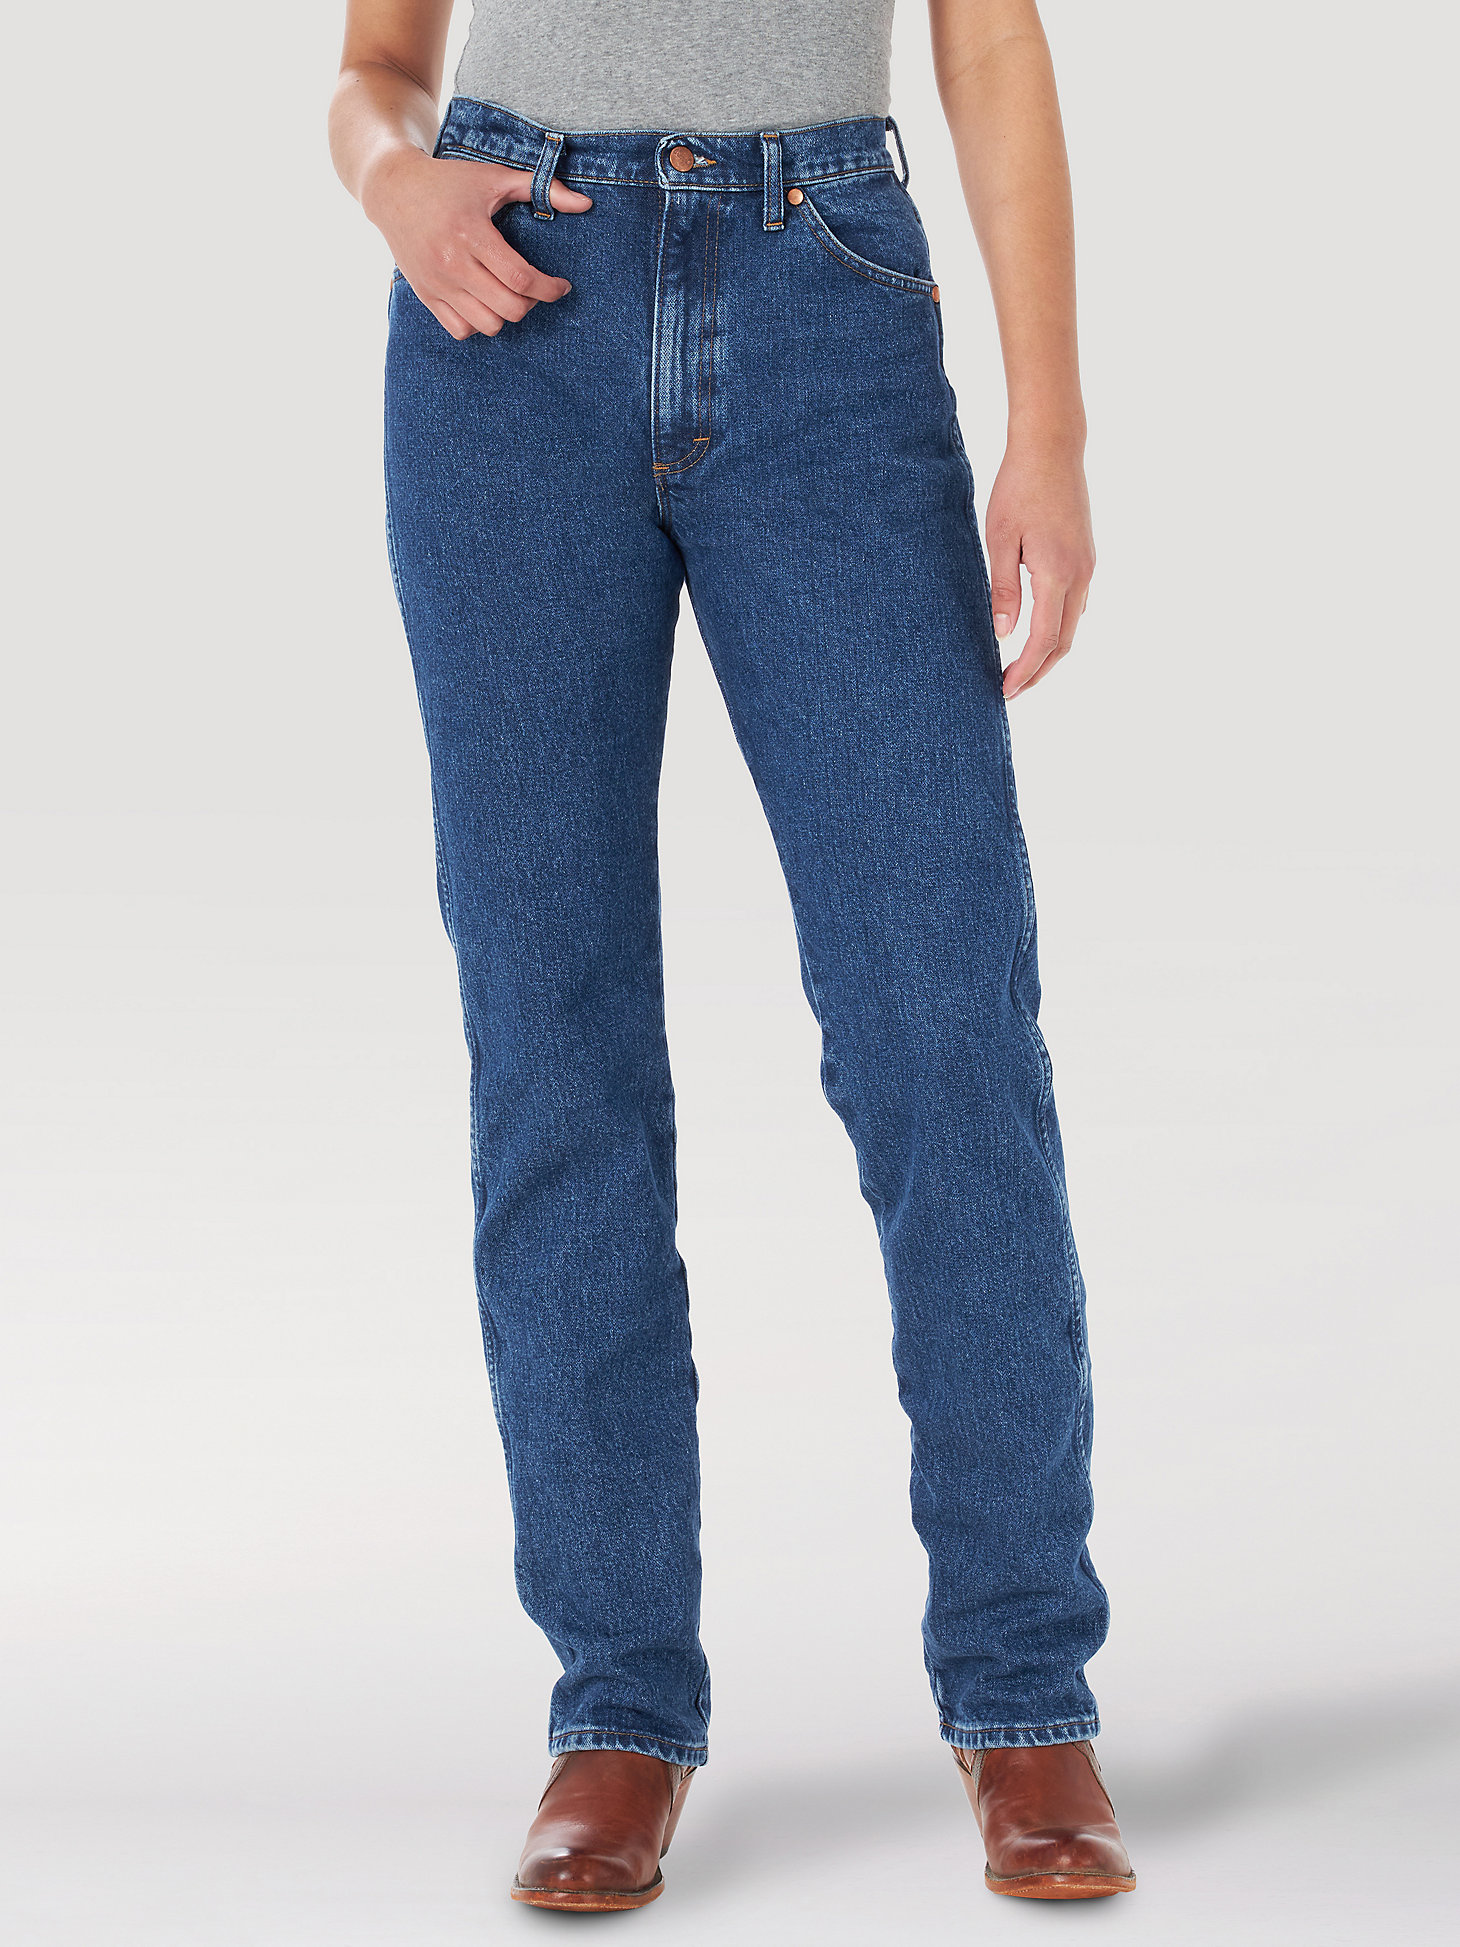 Women's Wrangler® Cowboy Cut® Slim Fit Jean in Stonewash alternative view 3